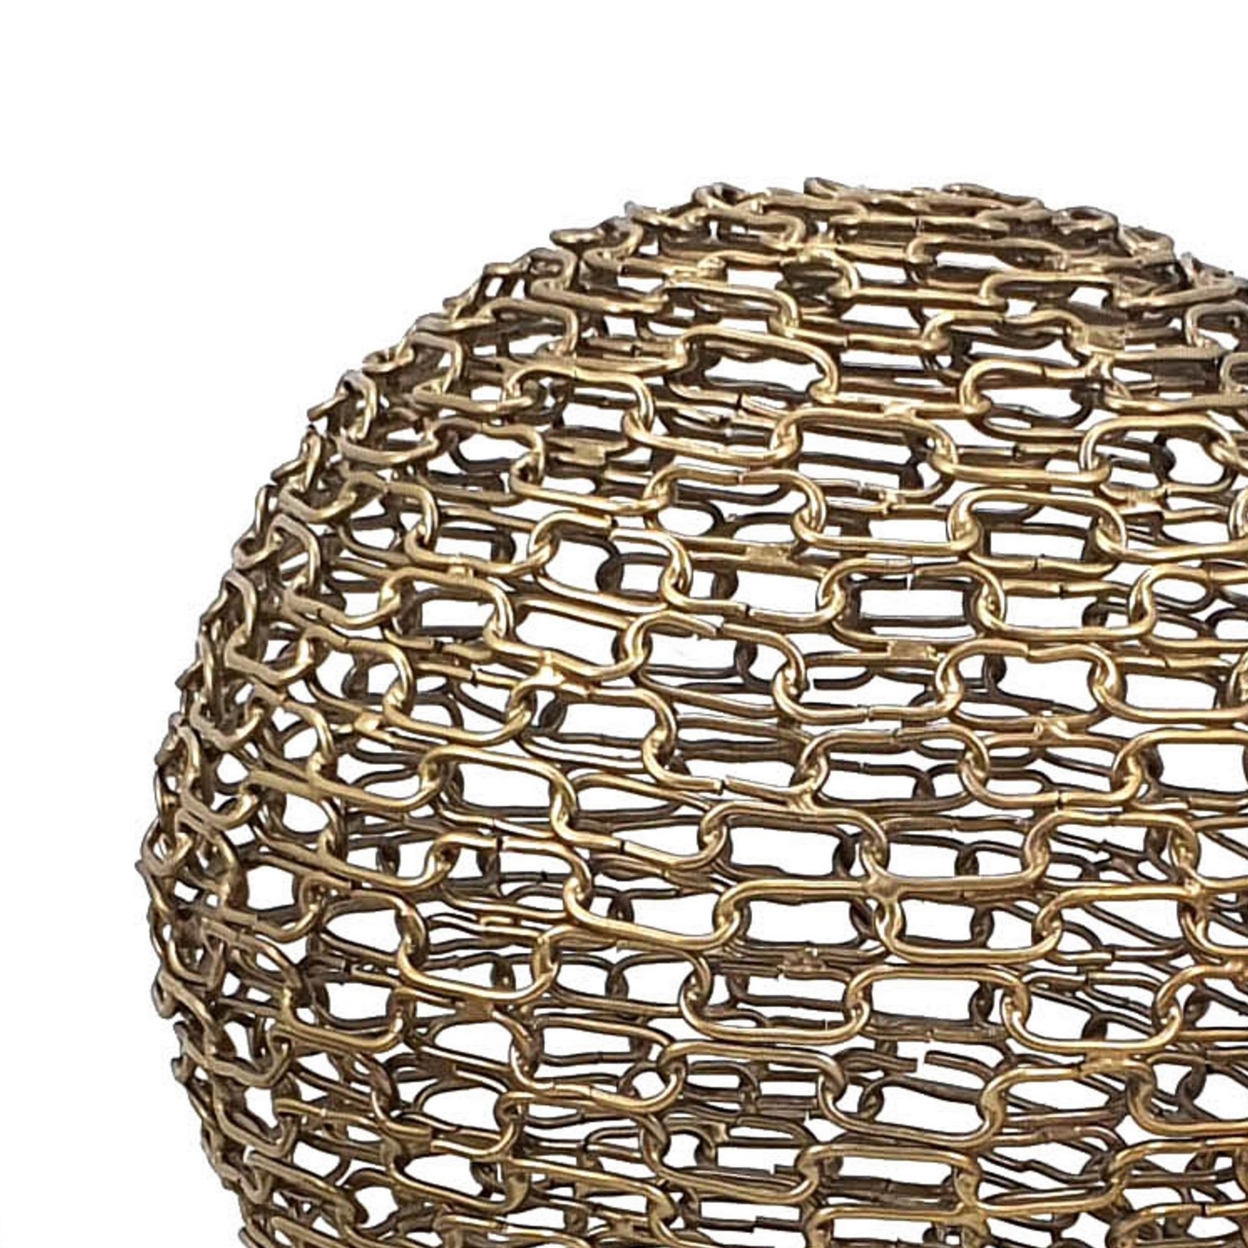 7, 5, 4 Inch Decorative Ball Set Of 3, Gold Finished Iron Interlinked Chain- Saltoro Sherpi